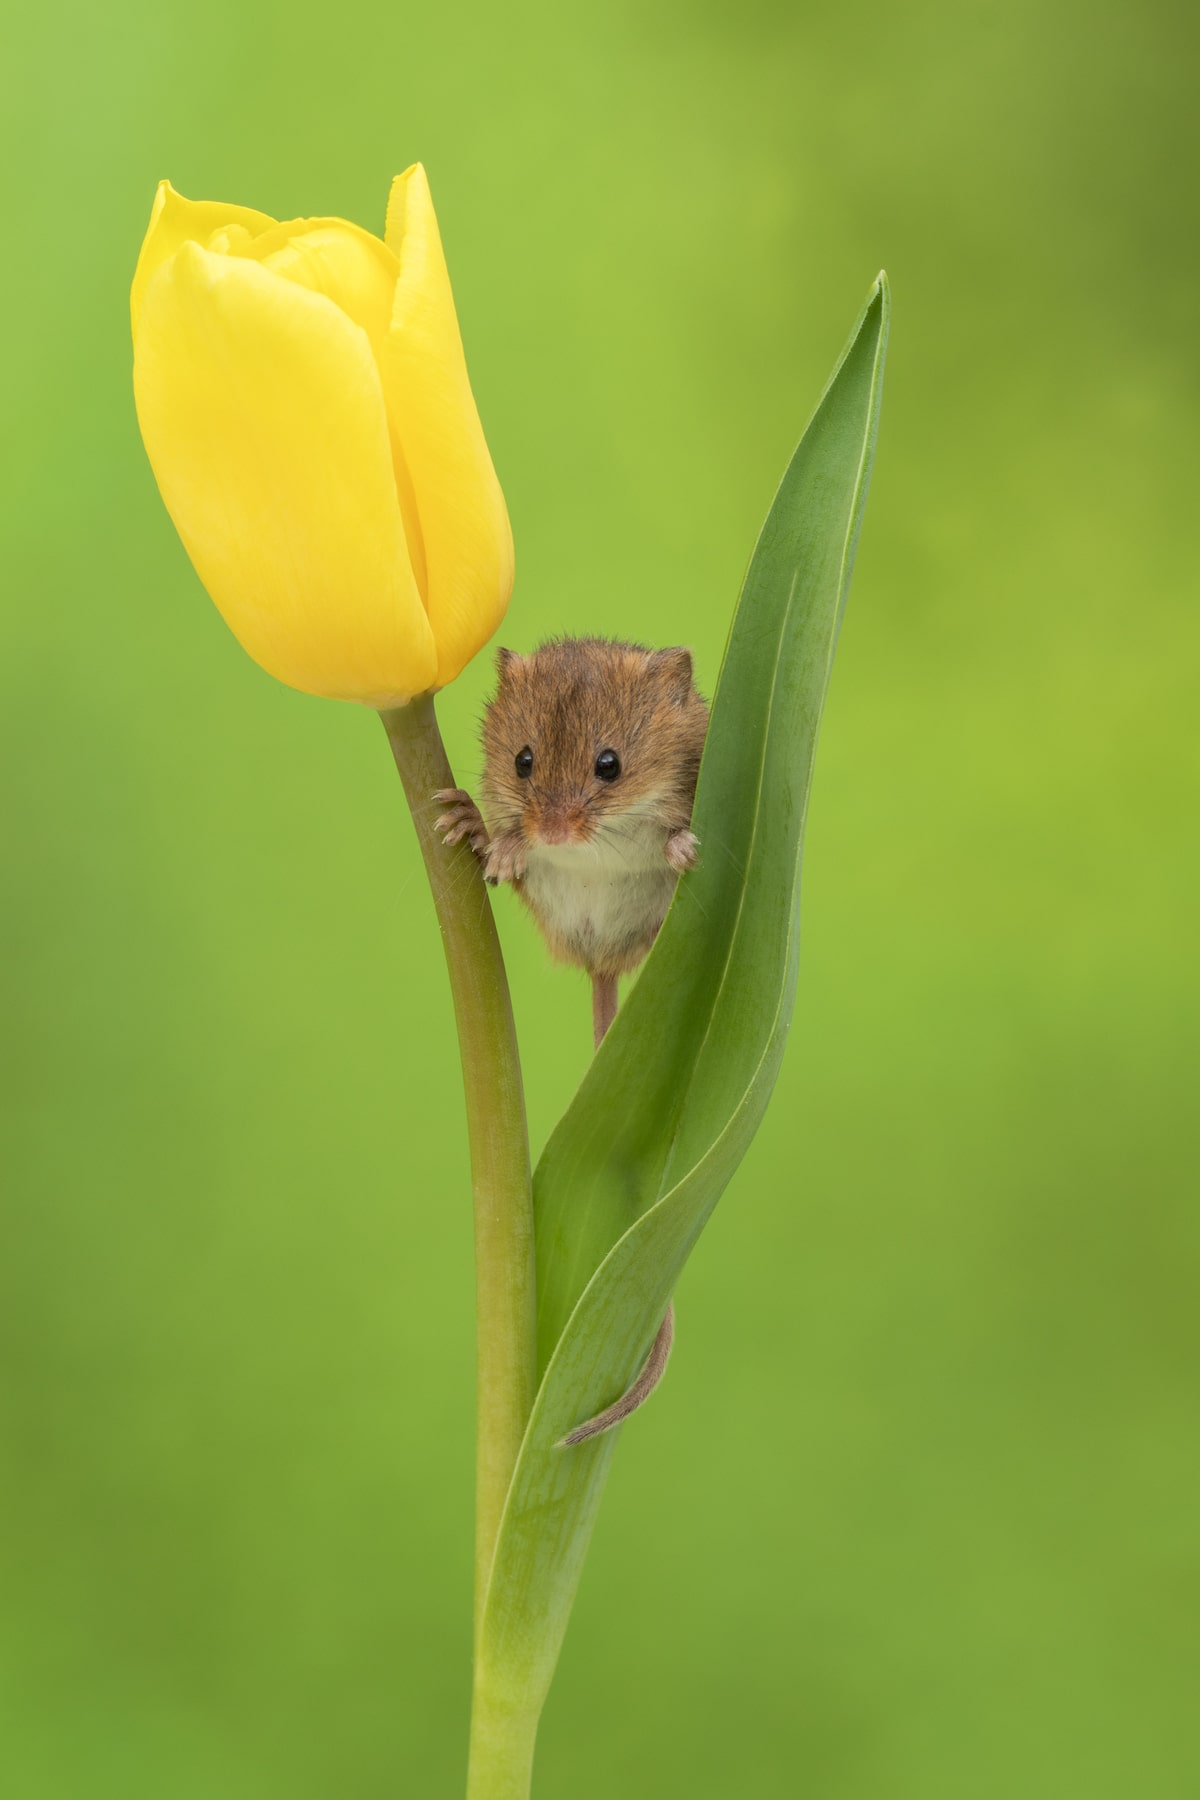 Harvest Mouse Balancing on a Tulip Stem